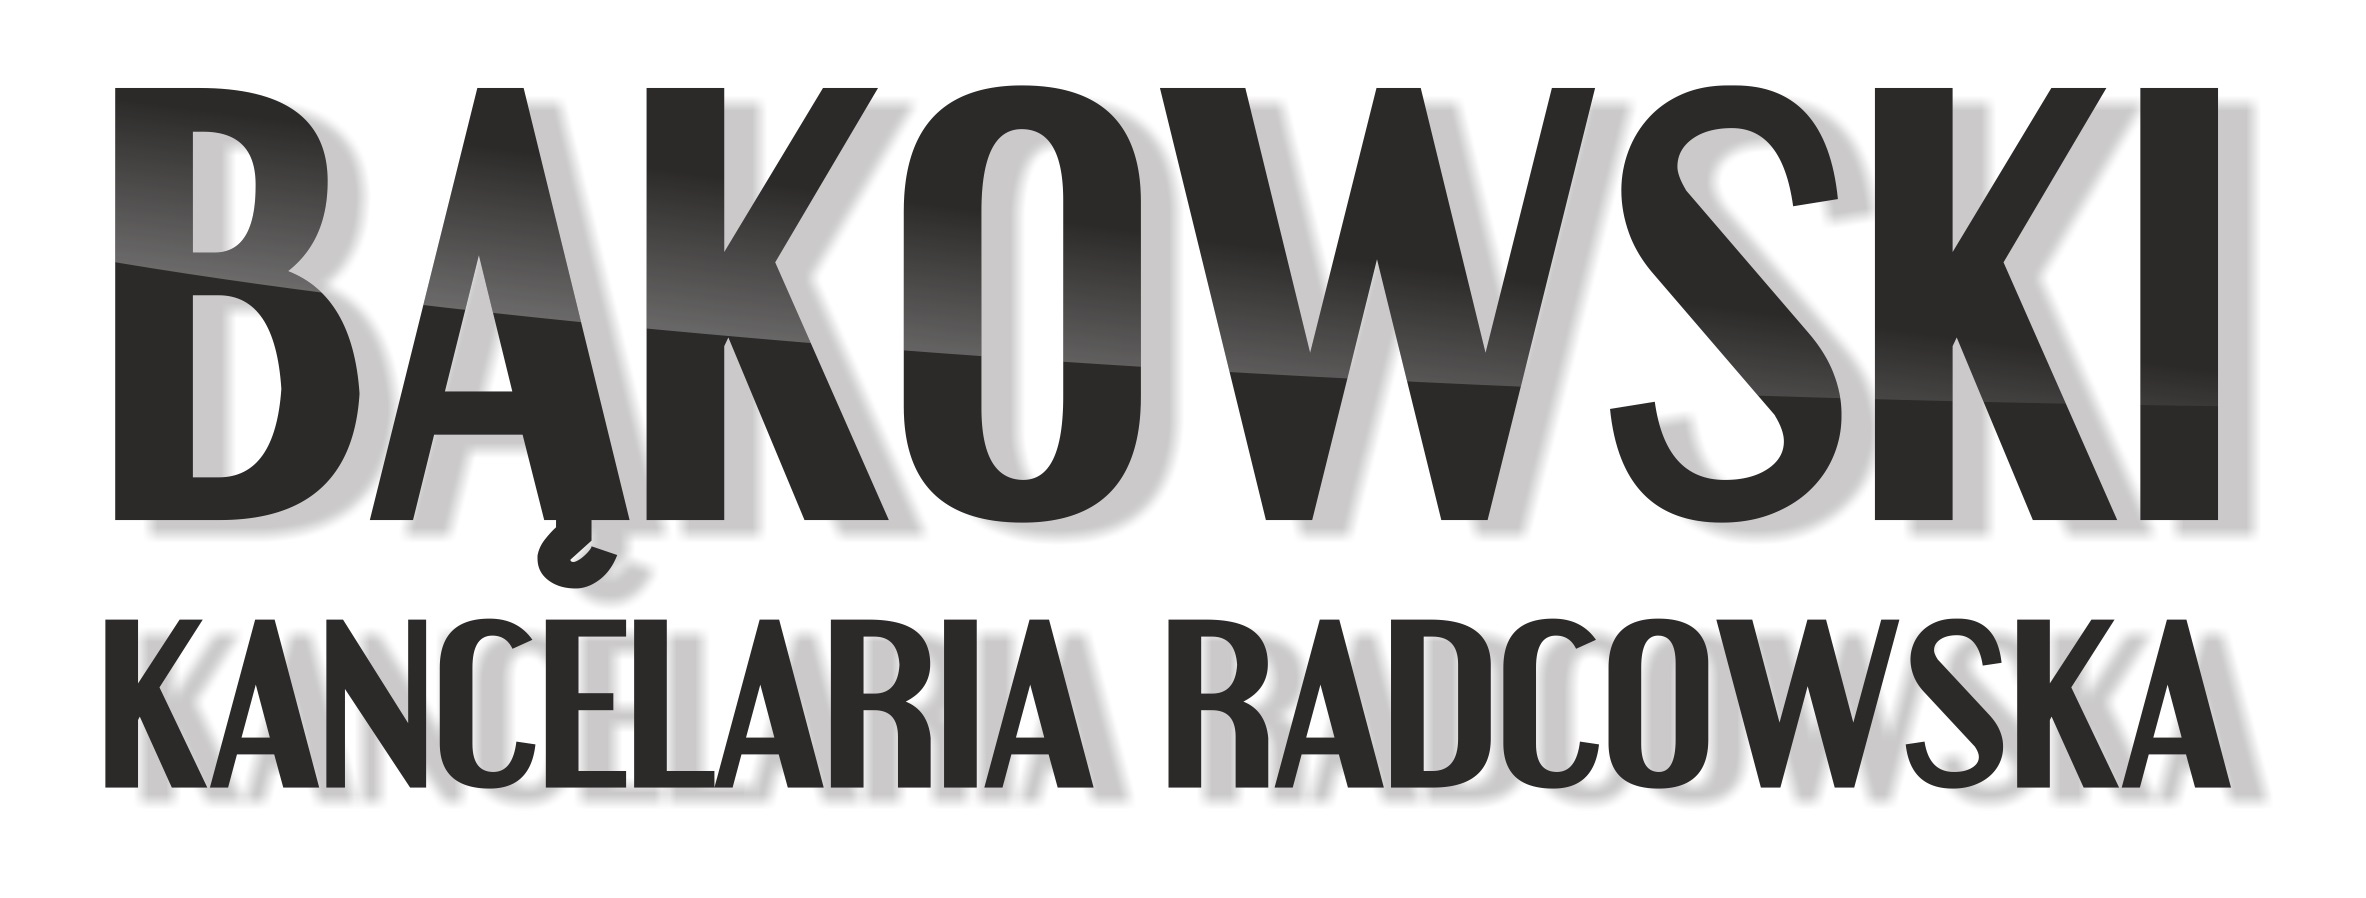  Bąkowski Kancelaria Radcowska